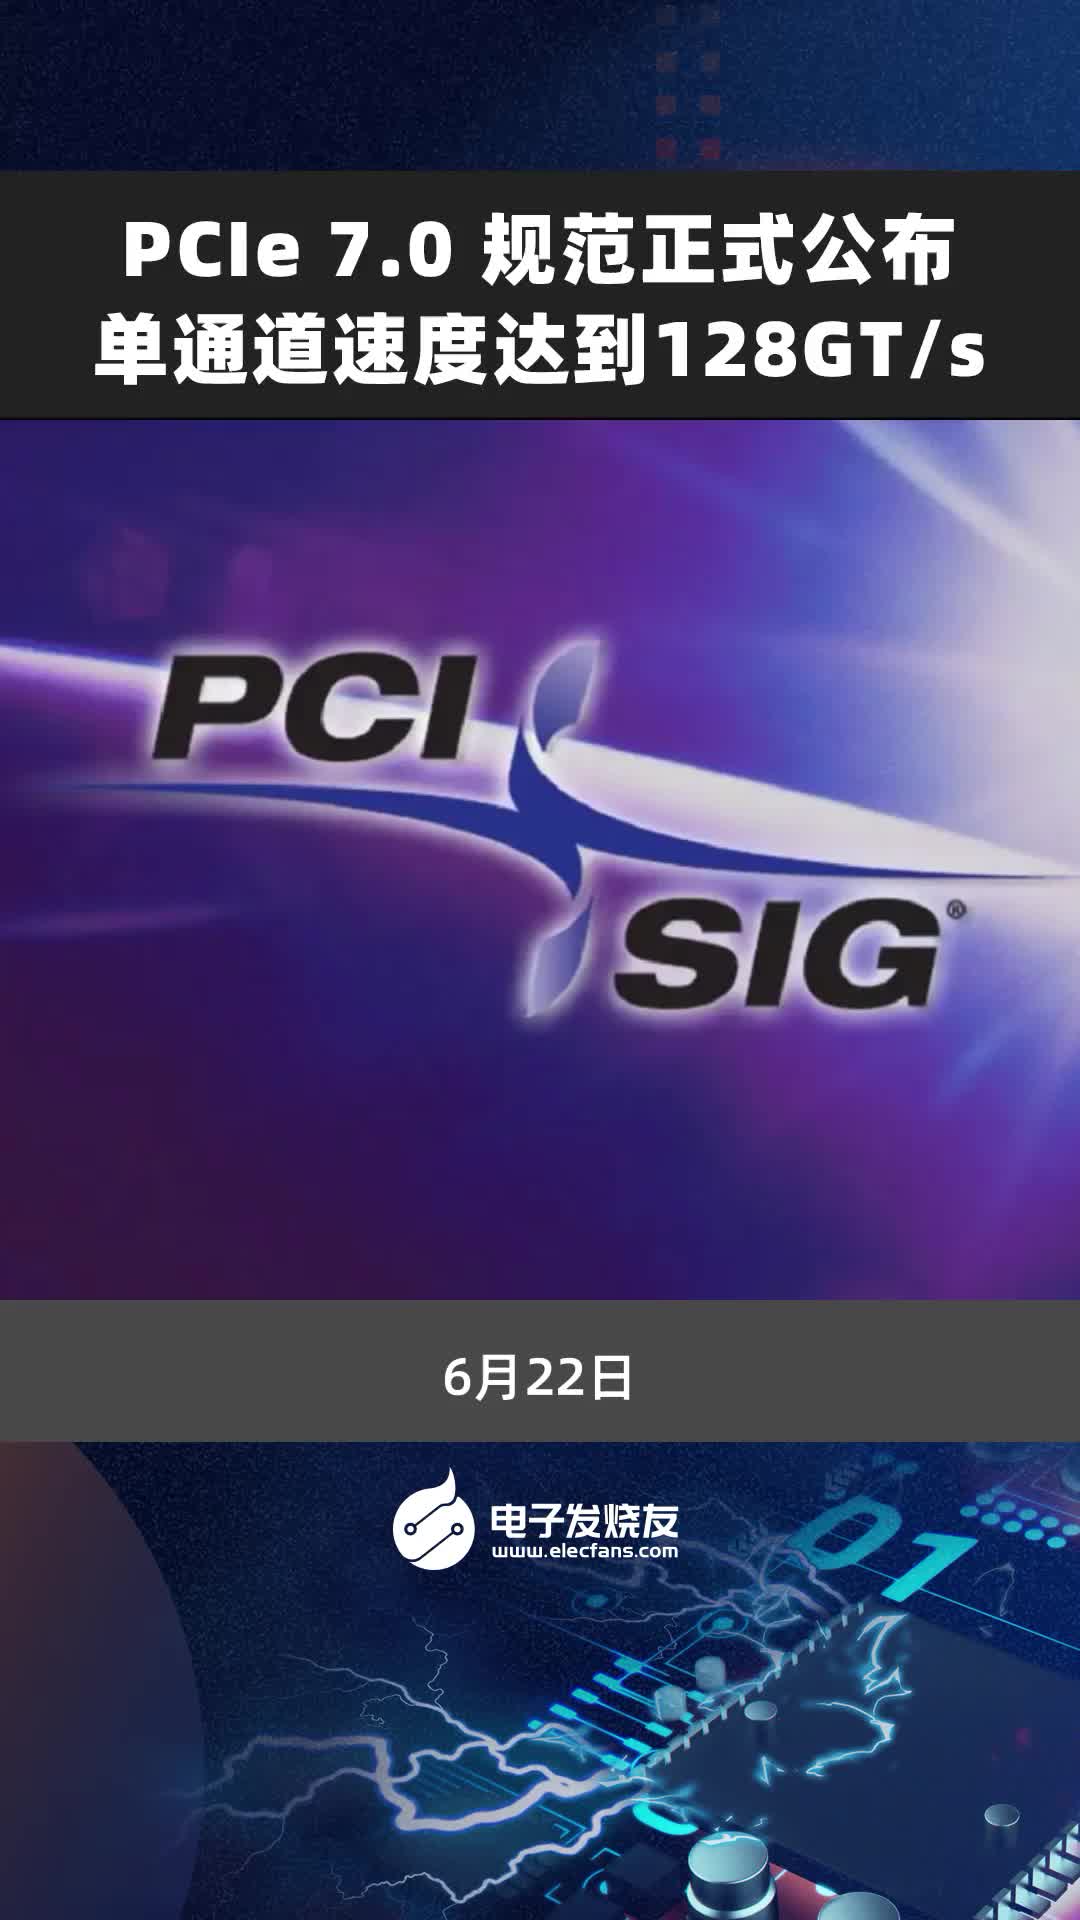 PCle7.0 规范正式公布单通道速度达到128GT/s